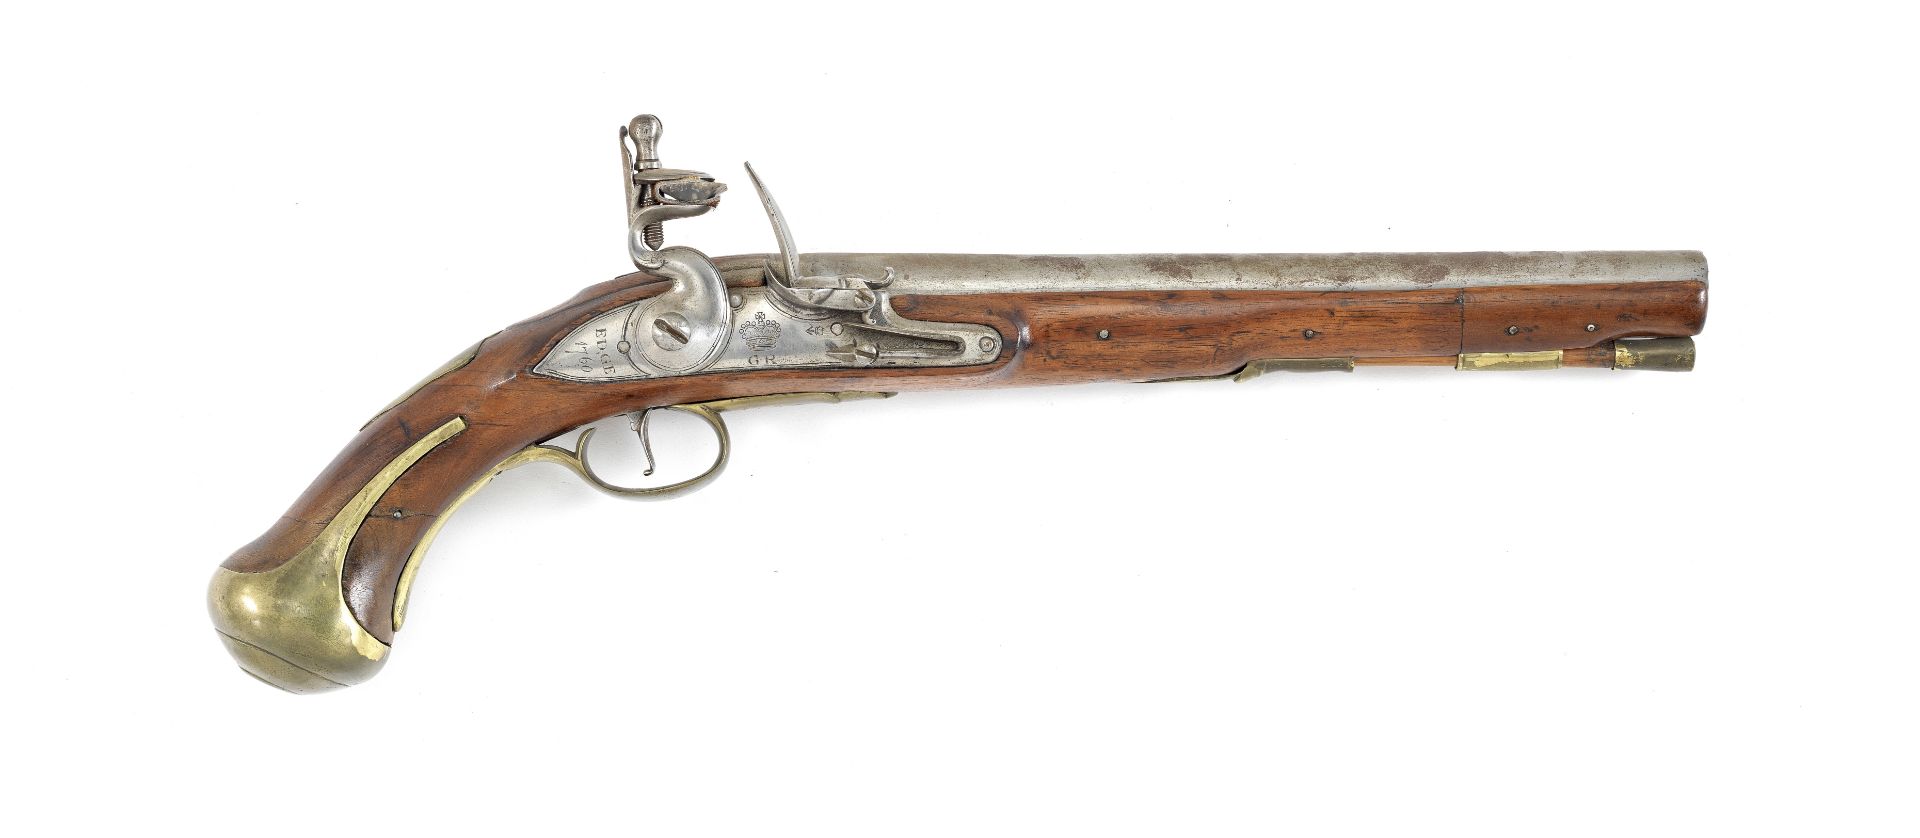 A Rare 16-Bore Flintlock 1756/81 Pattern Land Service Pistol